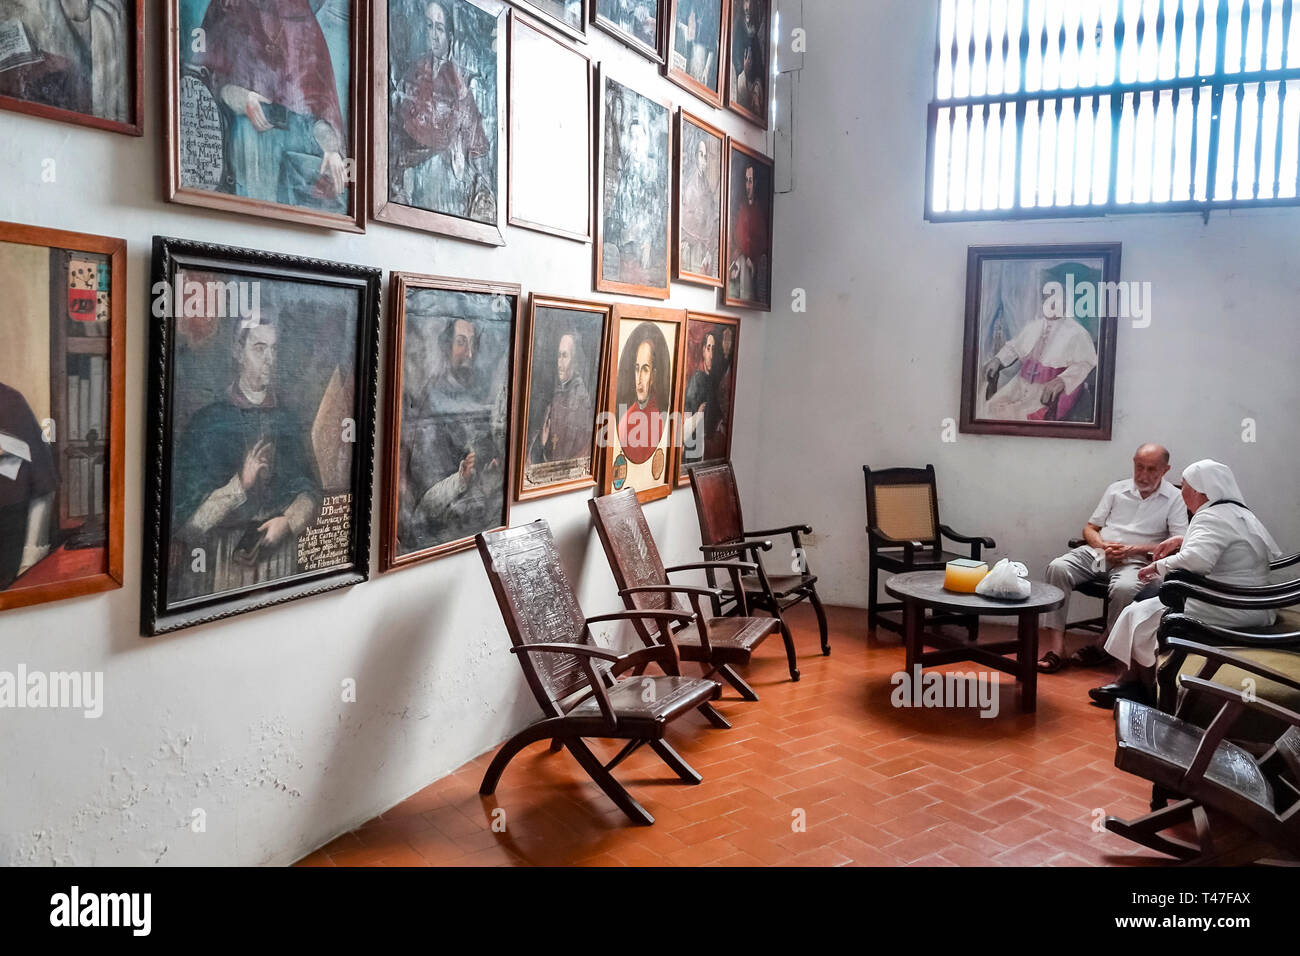 Cartagena Colombia,Hispanic resident,residents,San Pedro Claver Museum & Cloisters,gallery display,religious art,paintings,senior seniors citizen citi Stock Photo